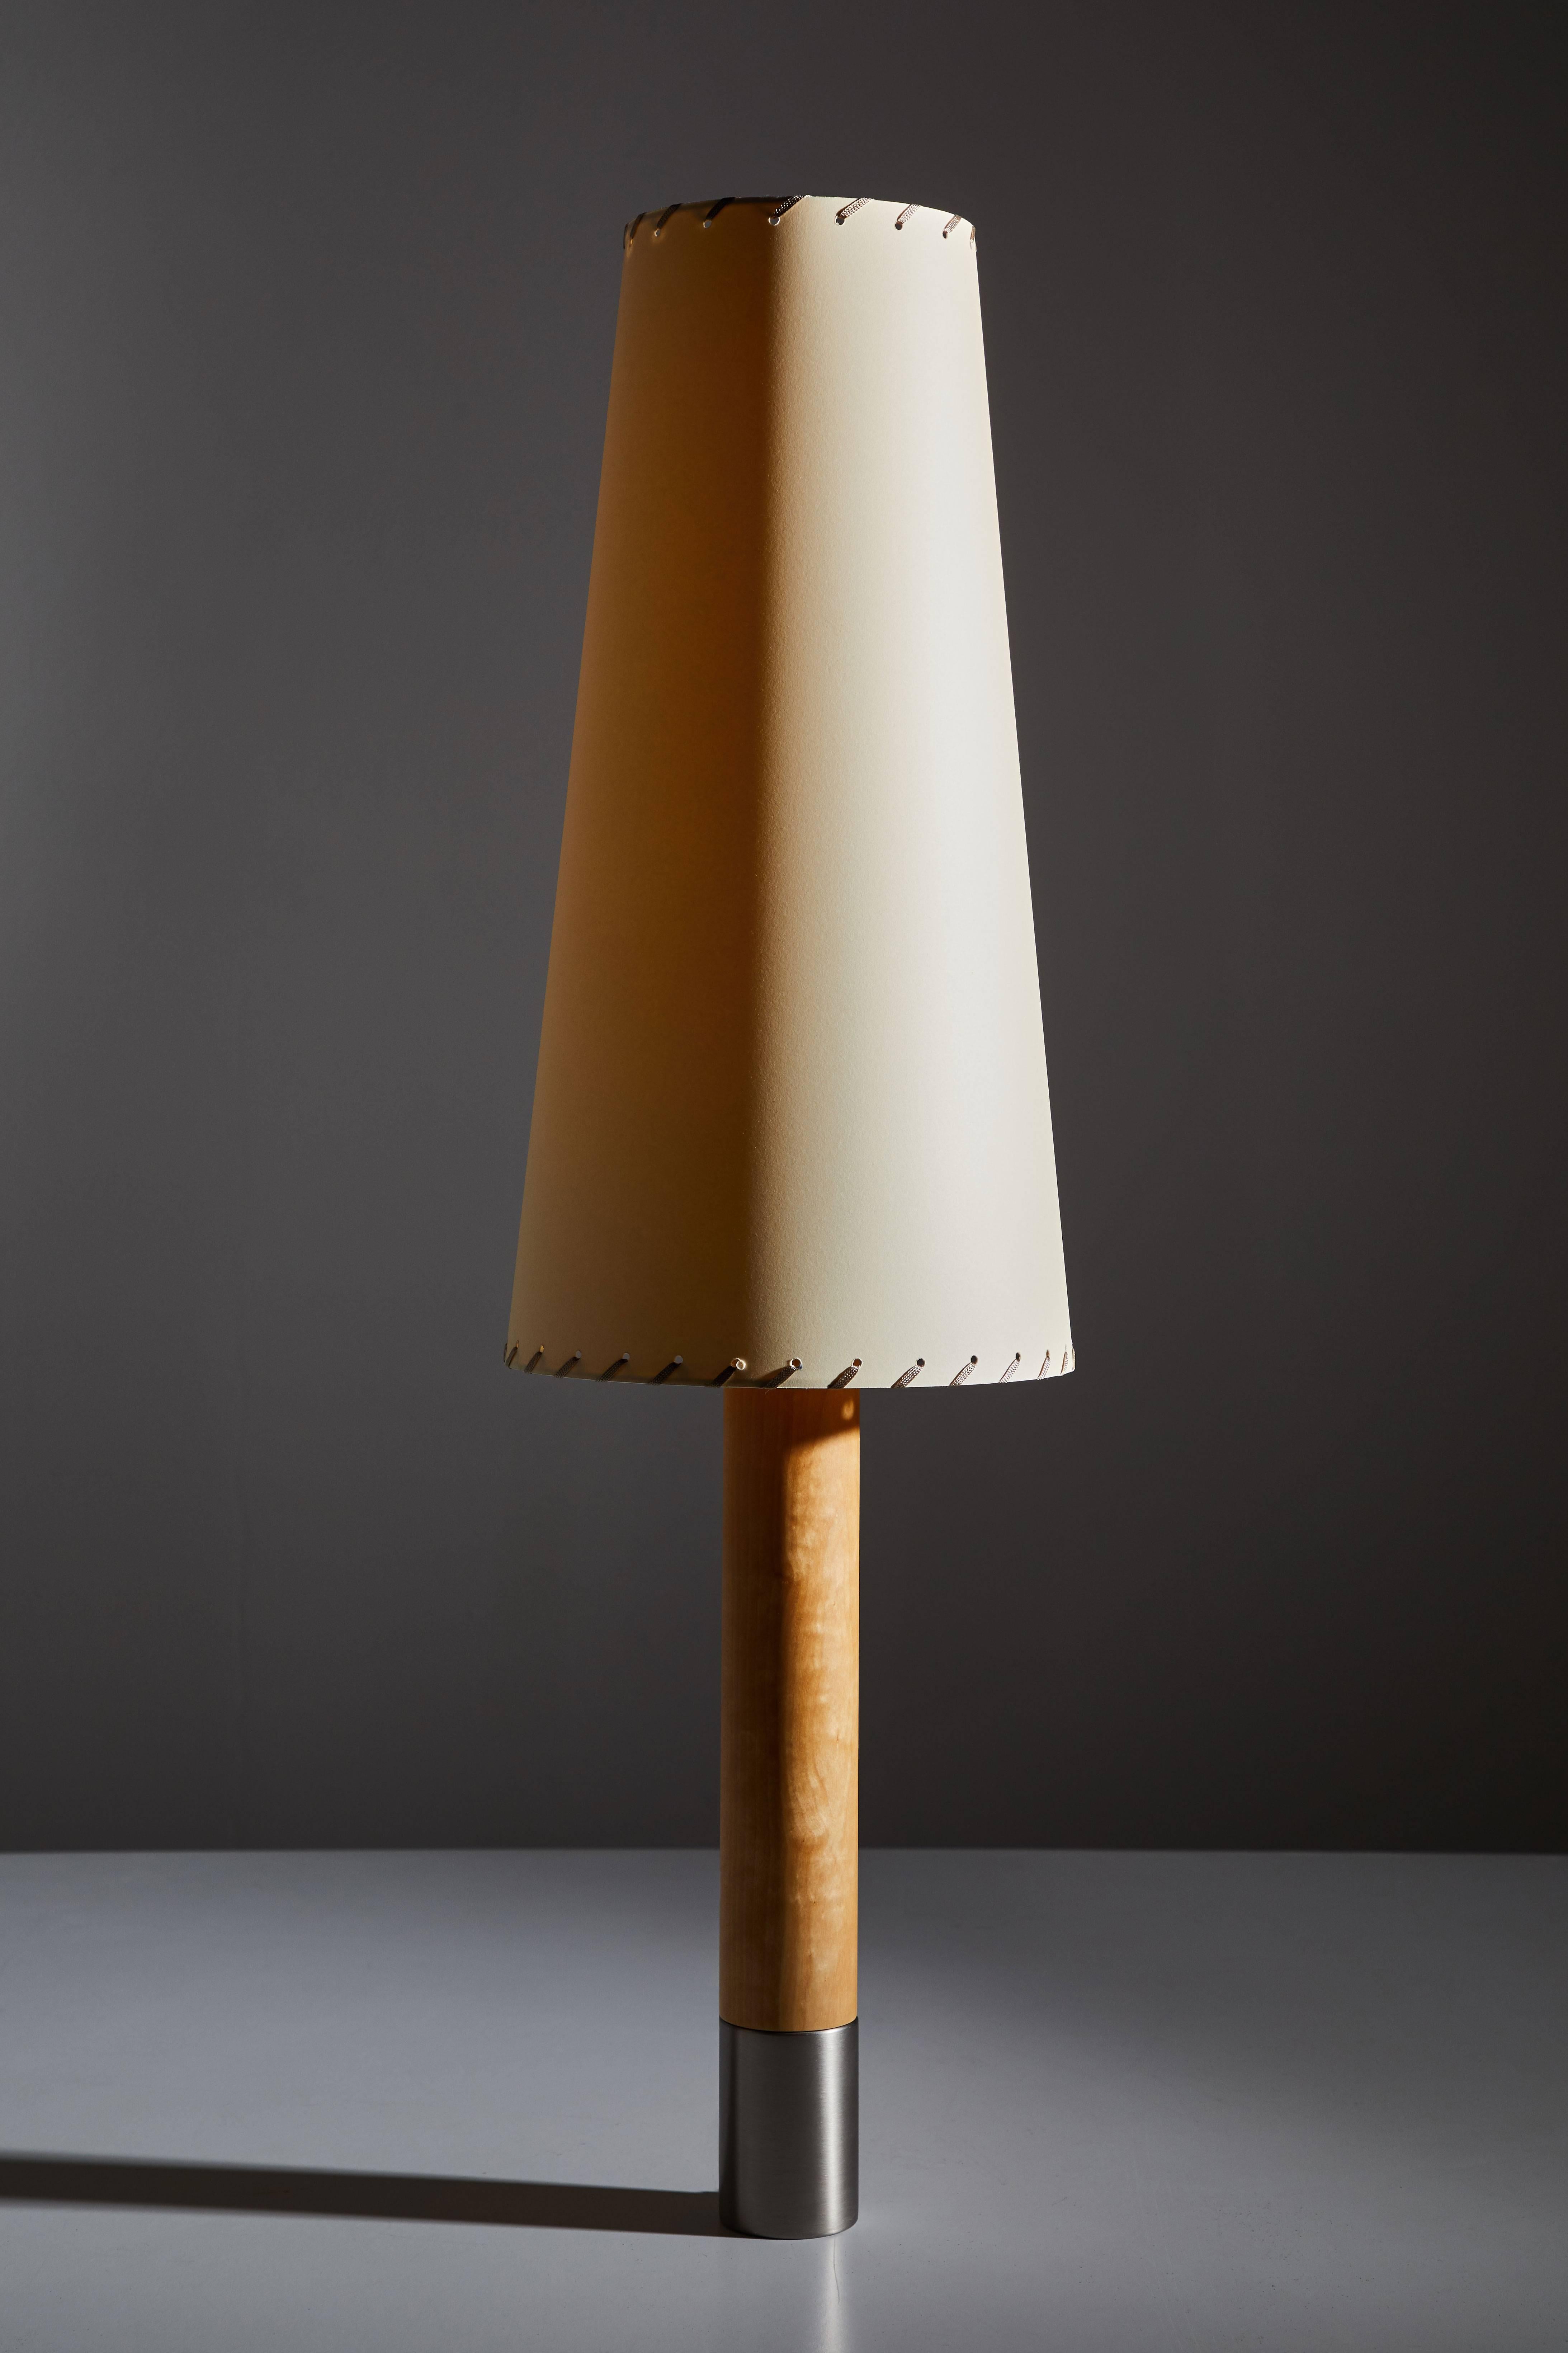 Spanish Básica M2 Table Lamp by Santiago Roqueta for Santa & Cole